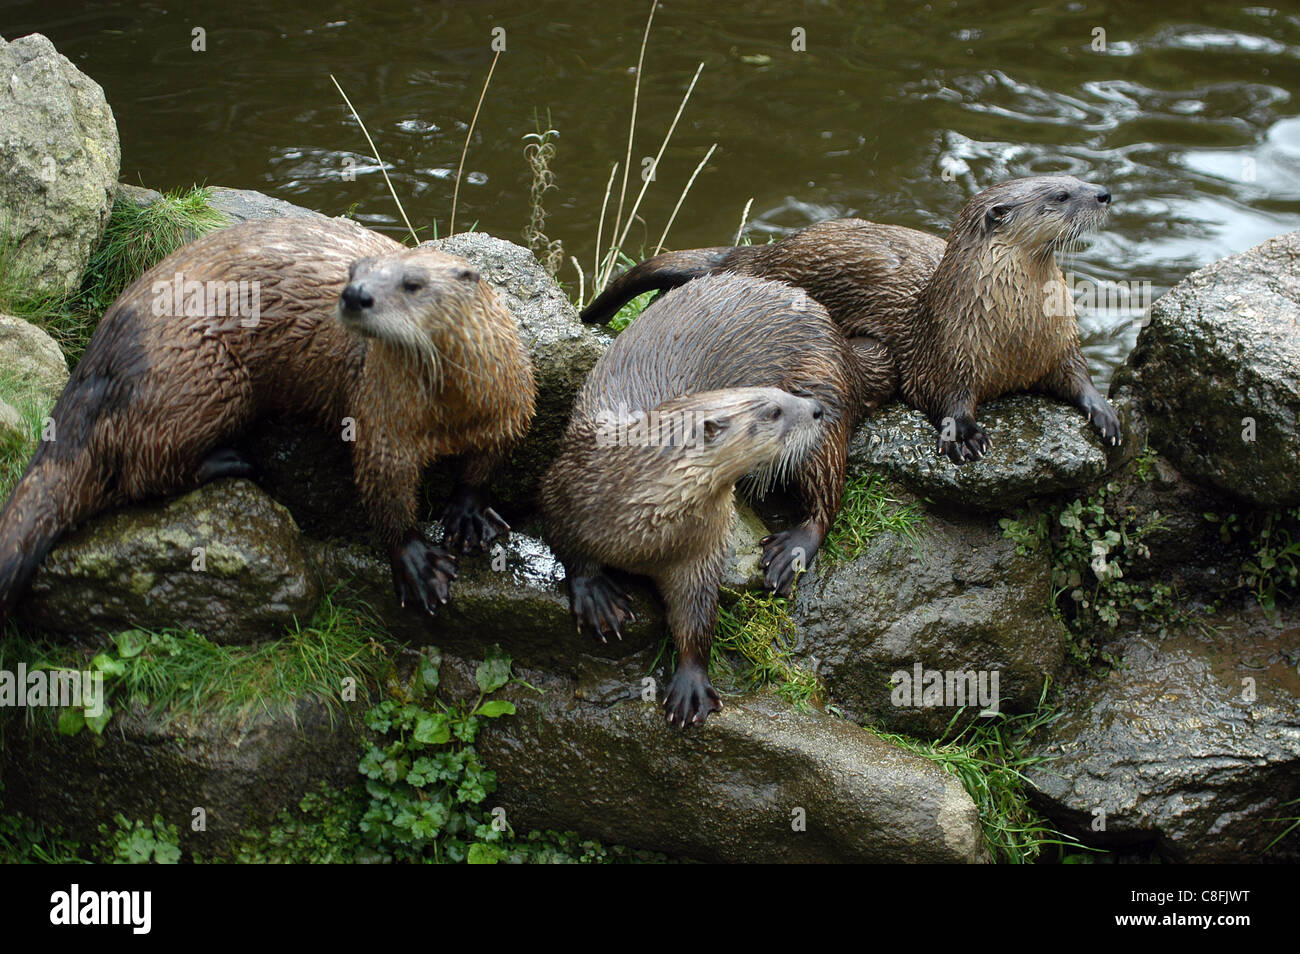 British or European Otters, (captive), Stock Photo